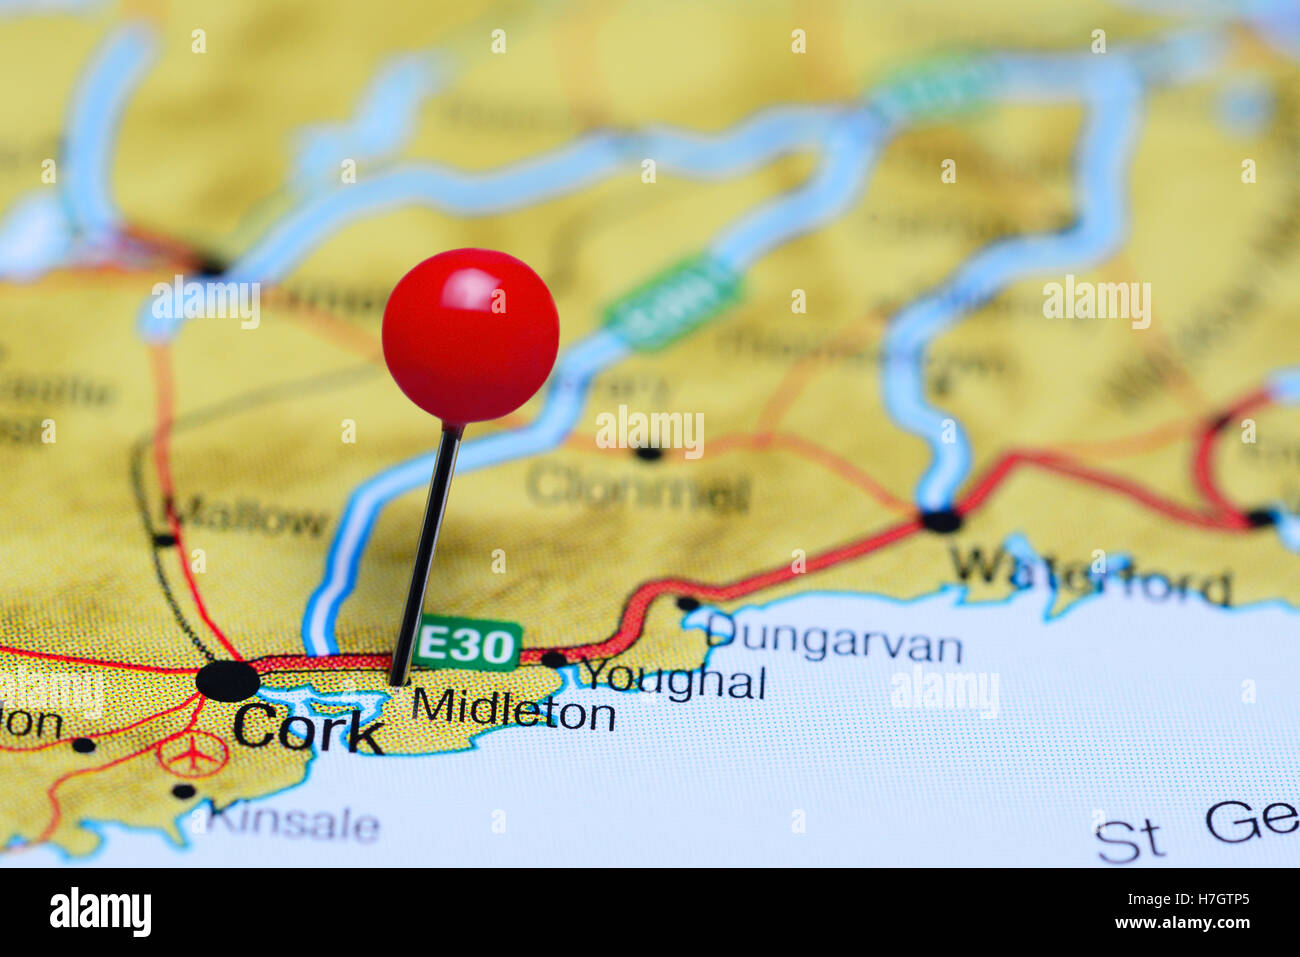 Midleton pinned on a map of Ireland Stock Photo